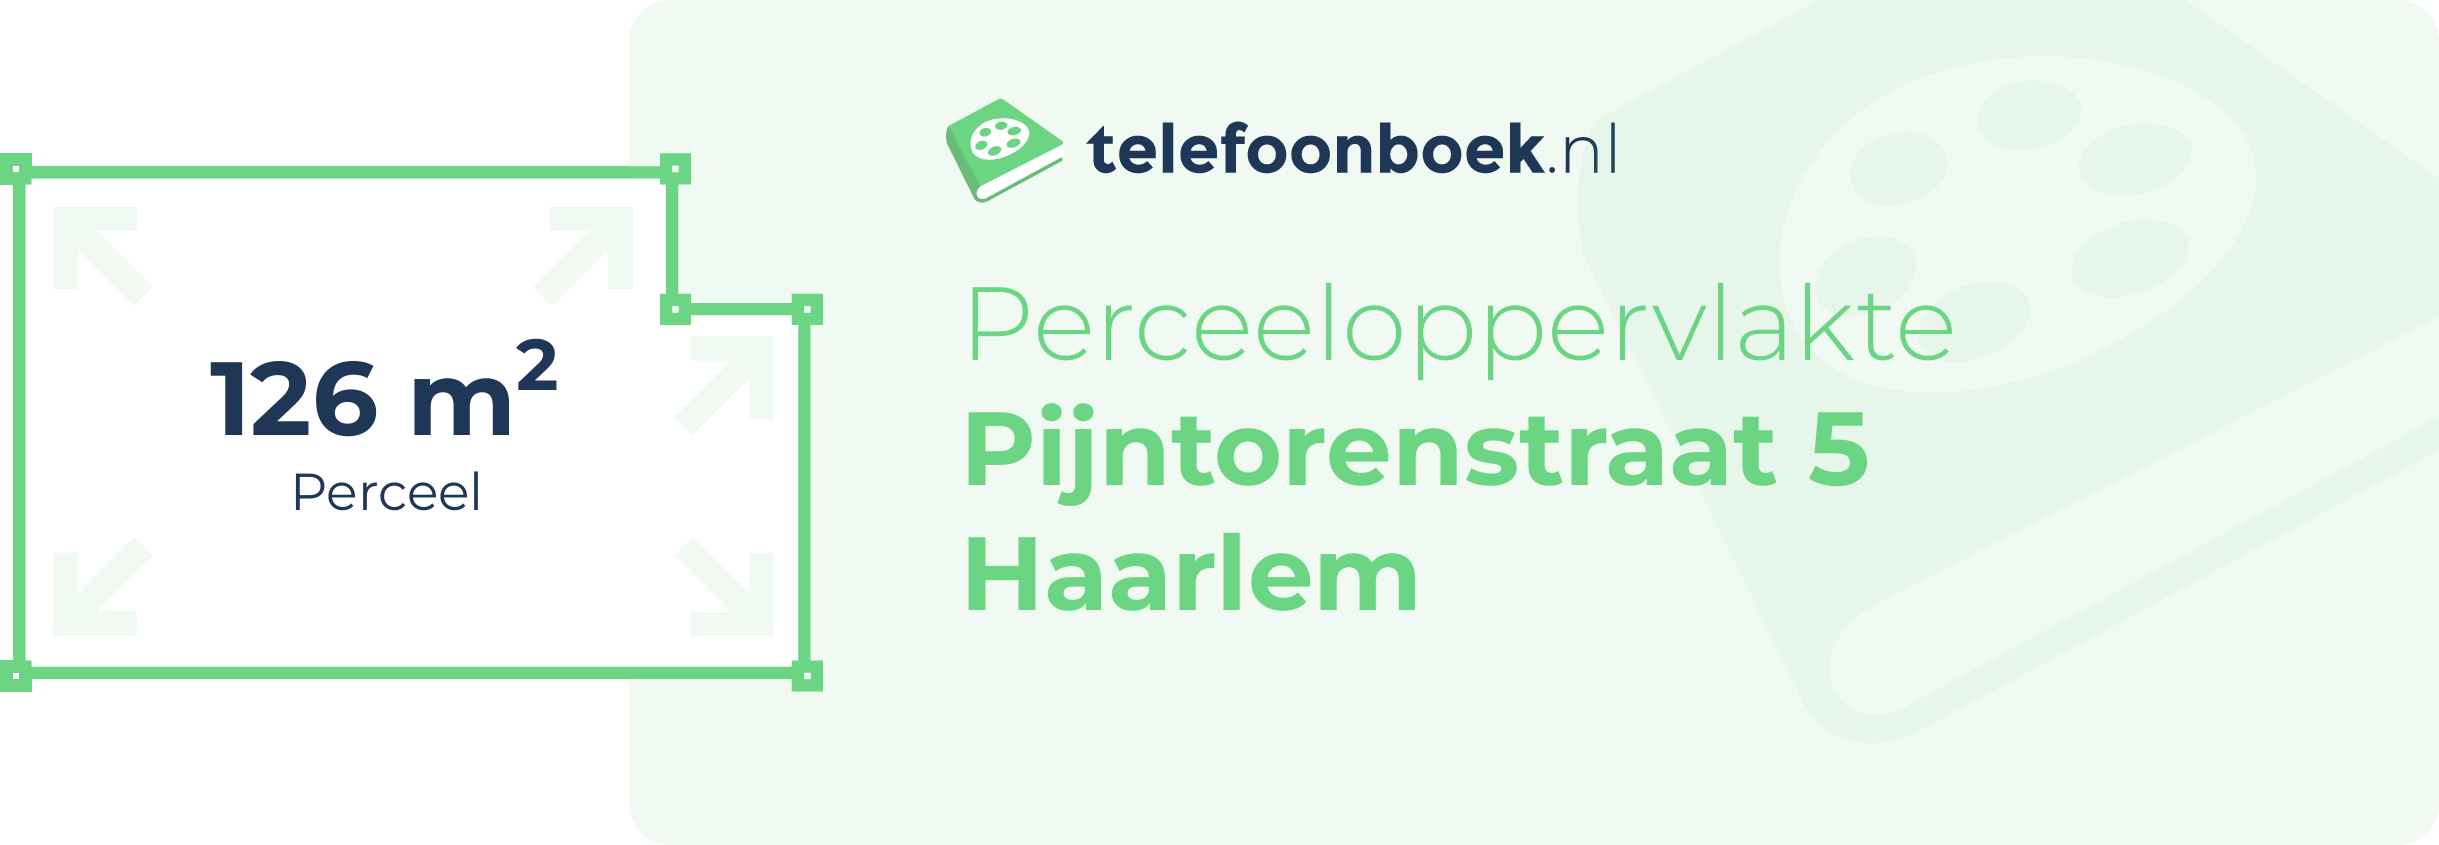 Perceeloppervlakte Pijntorenstraat 5 Haarlem